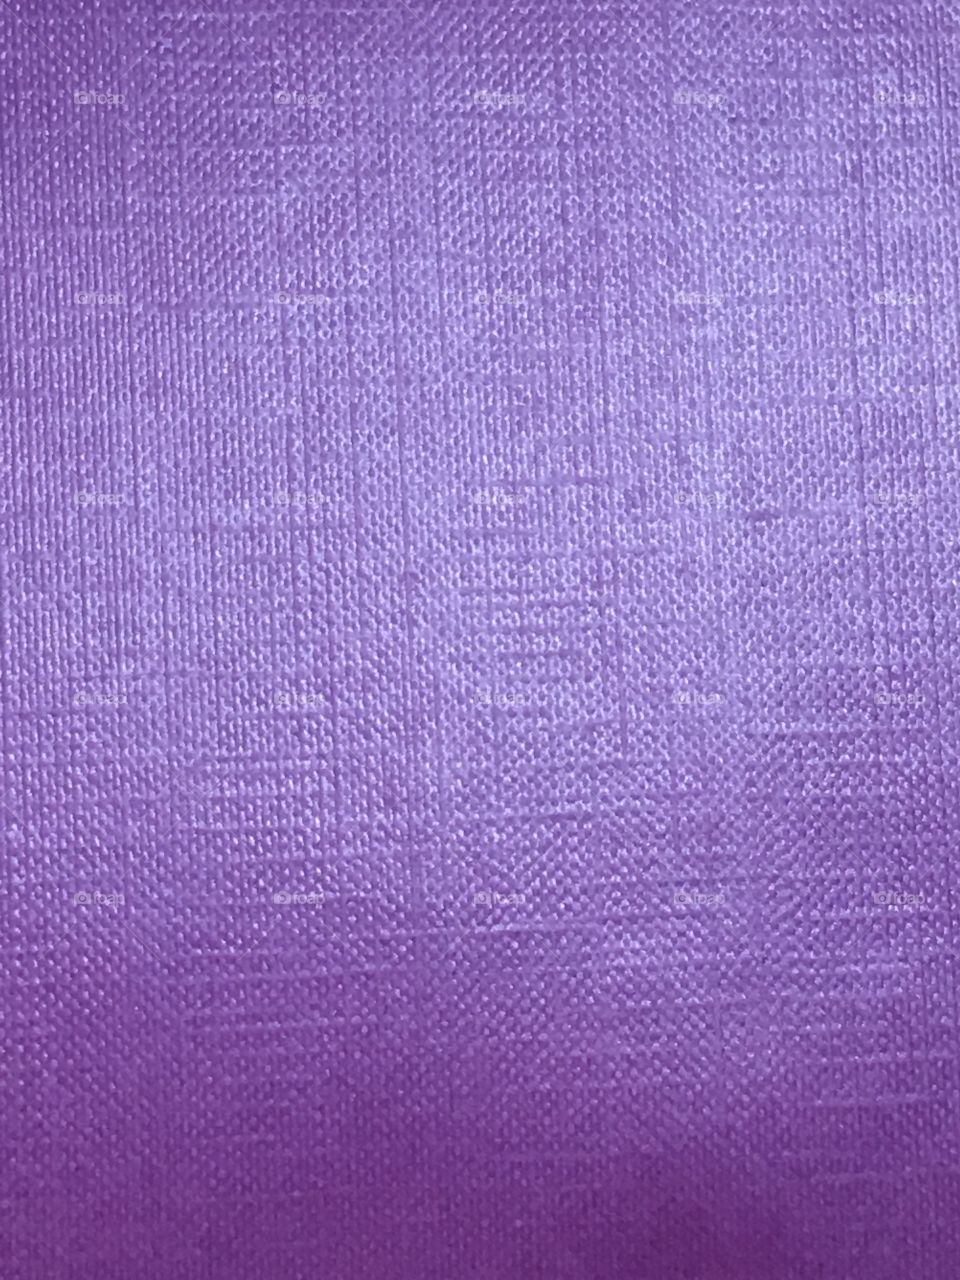 Purple wall paper